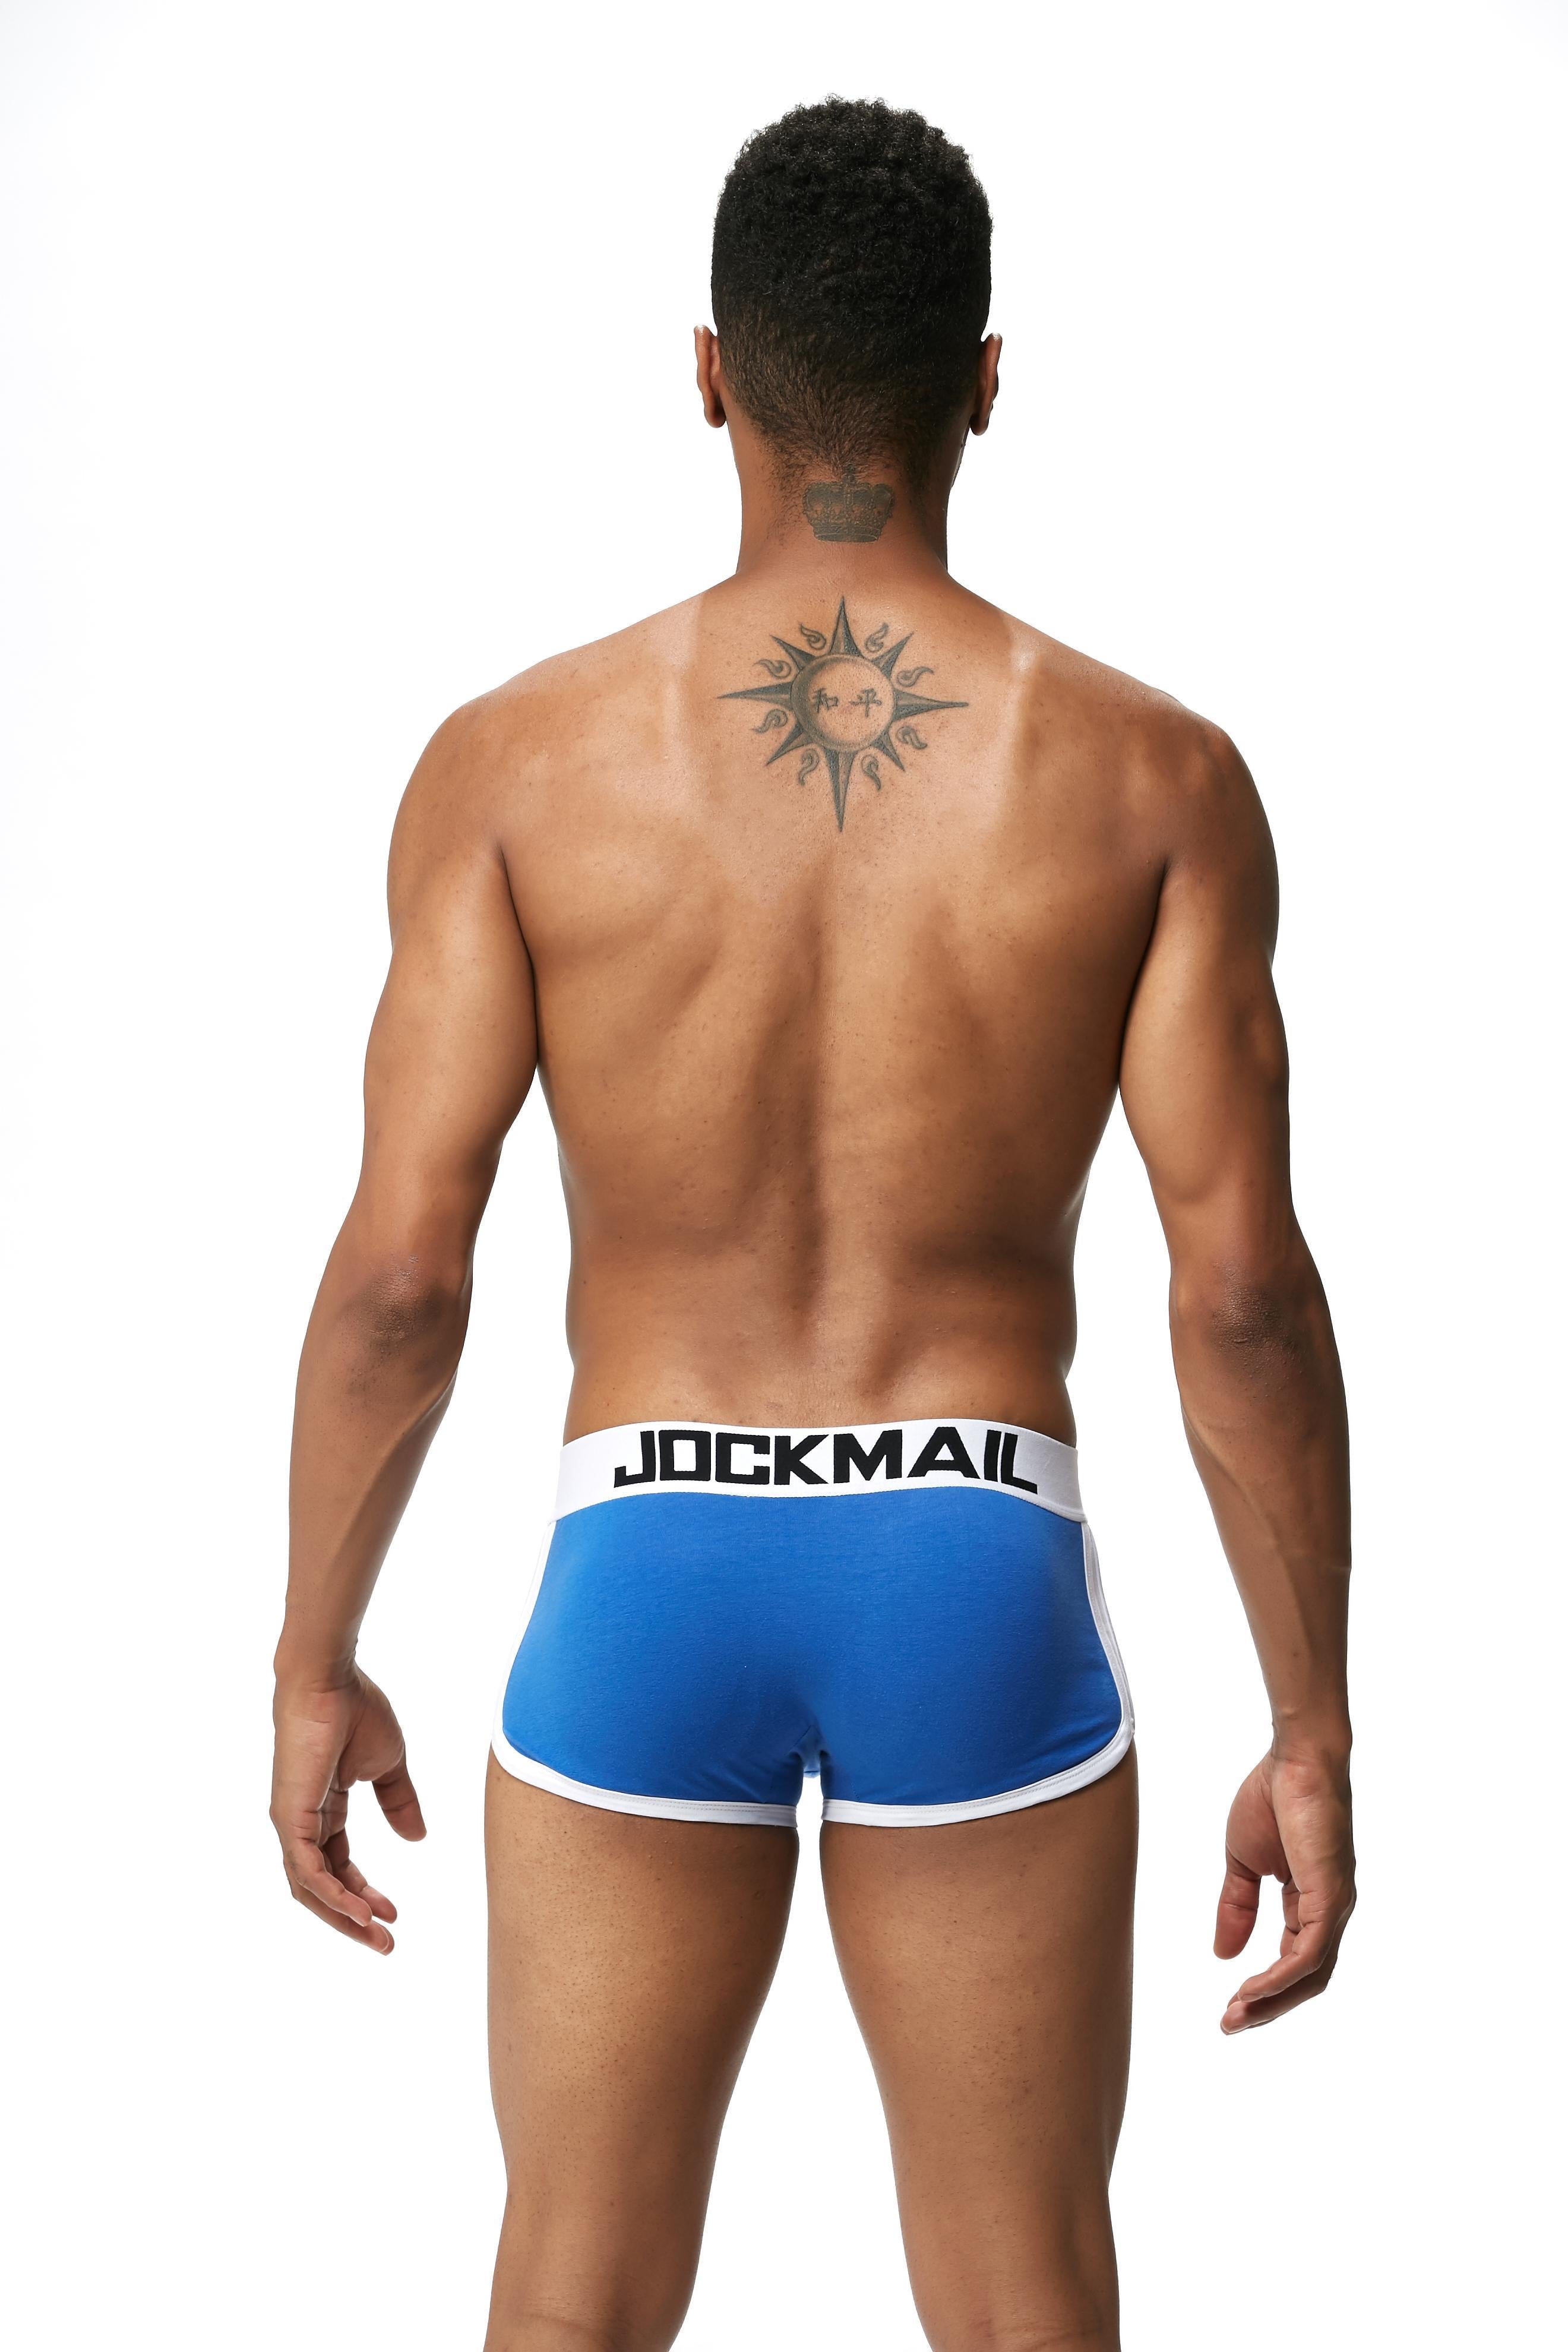 JOCKMAIL /Men Underwear Penis Jockstrap Sexy Bulge Enhancing Push